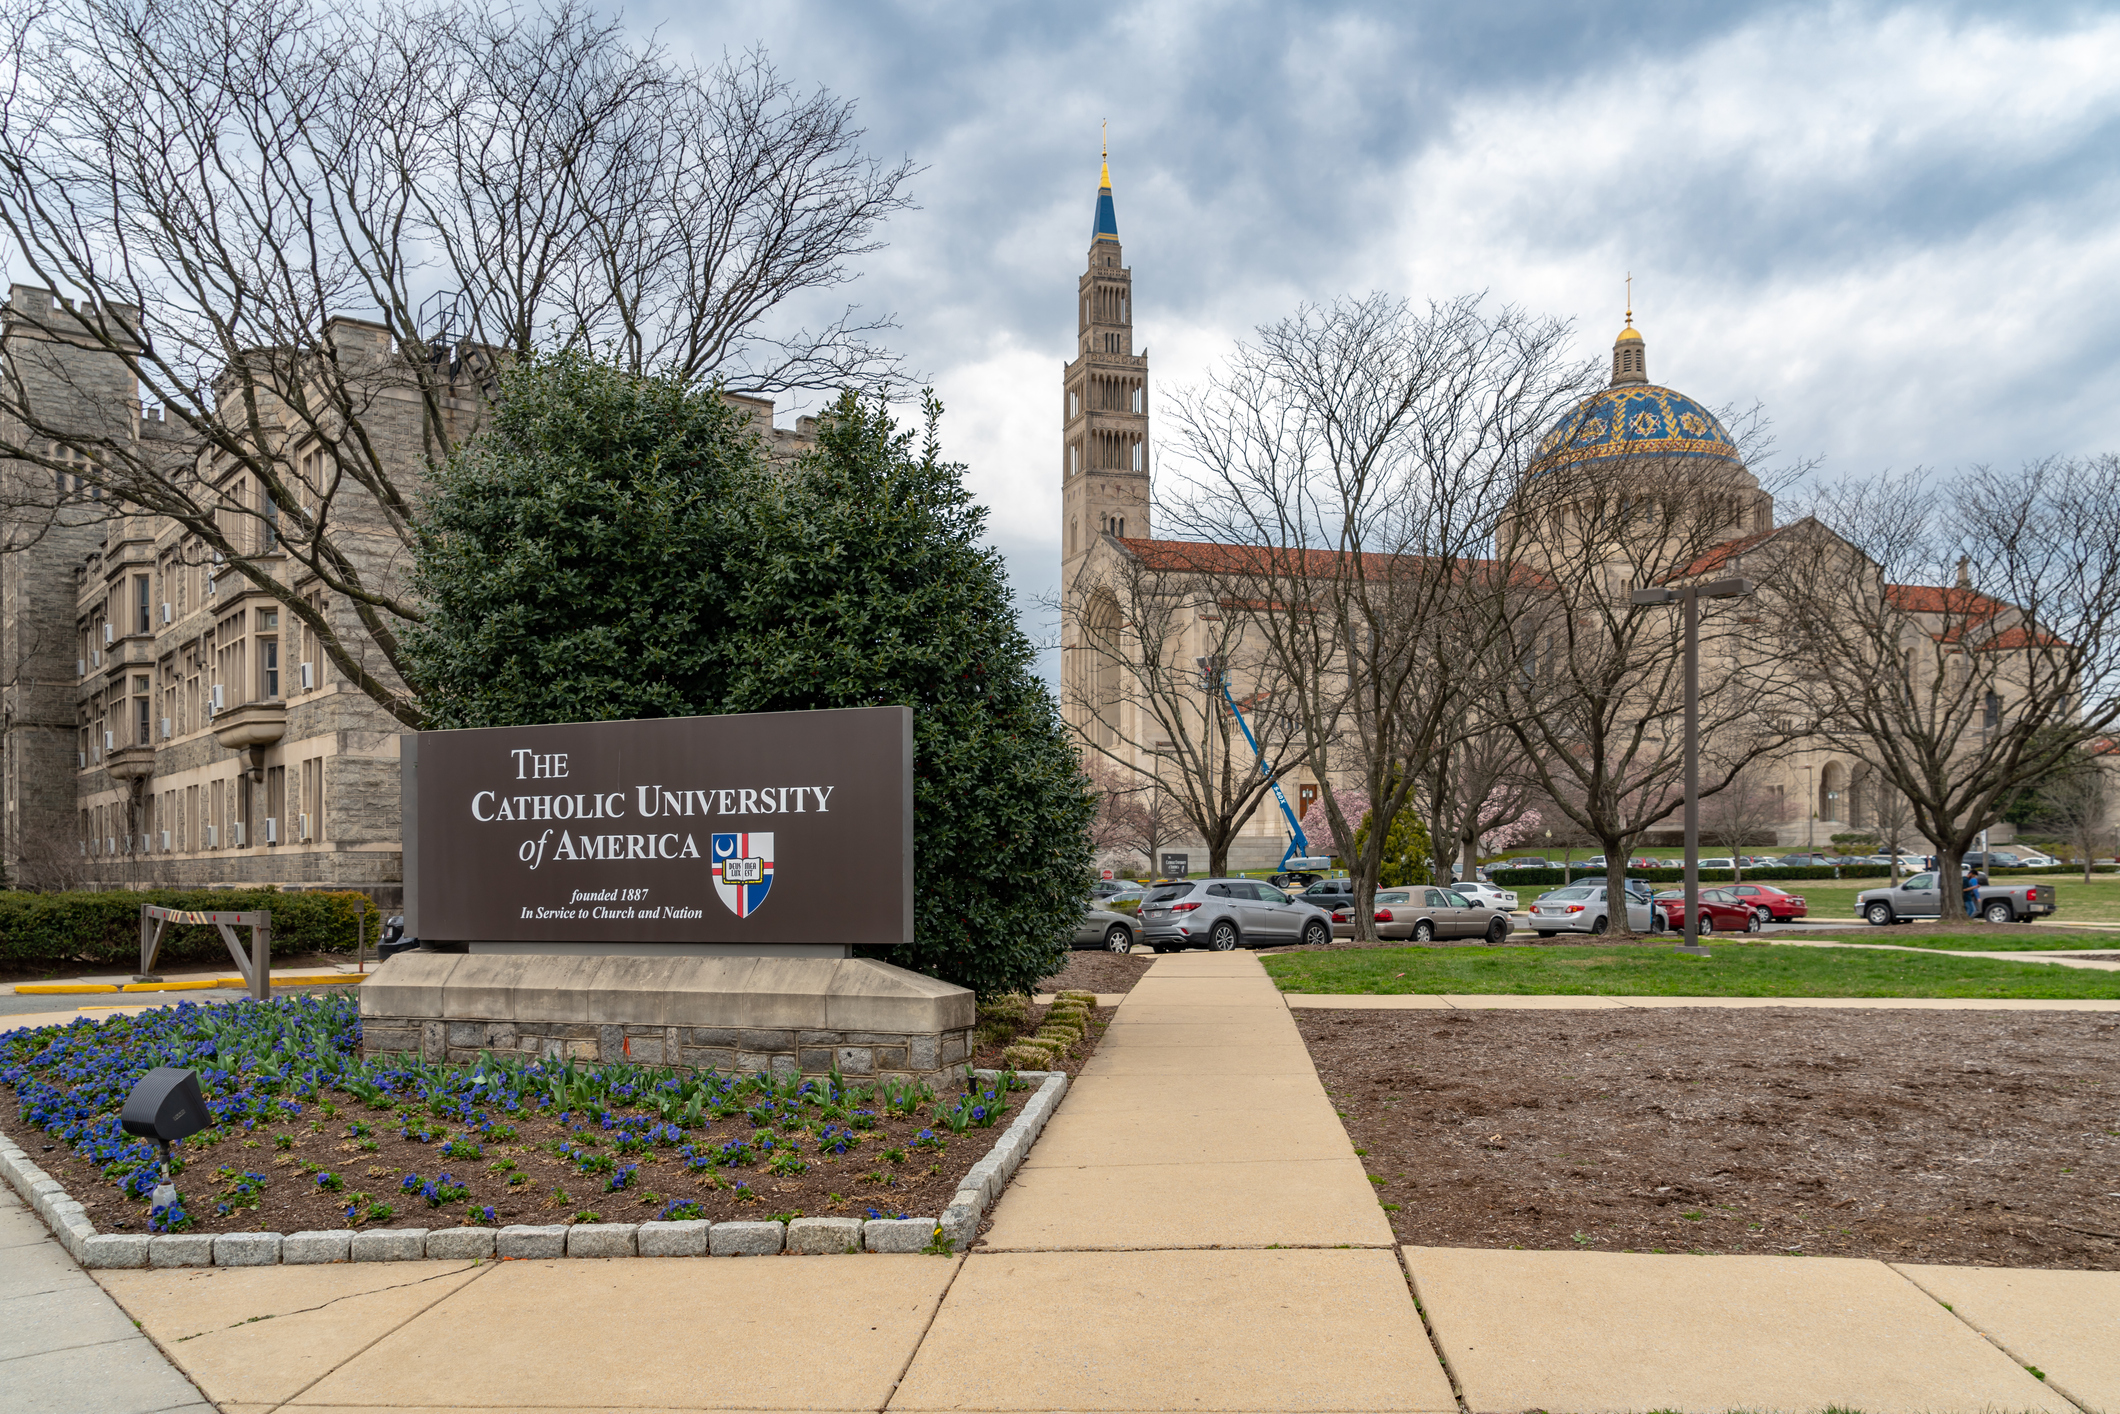 The Catholic University of America campus building in capital city, Washington DC, USA